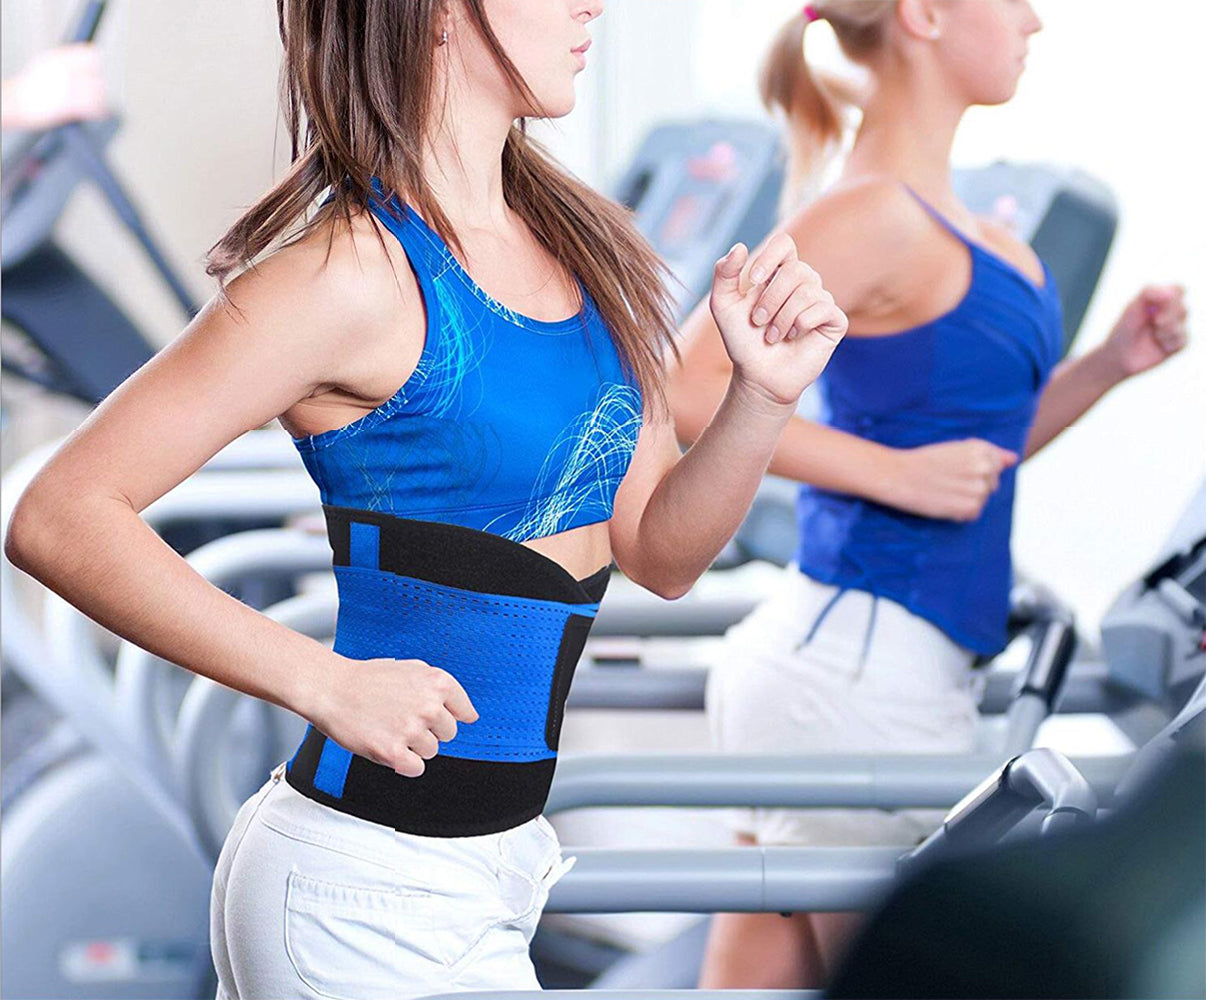 Generic Women &Men Waist Trainer Belt Tummy Control Waist Cincher